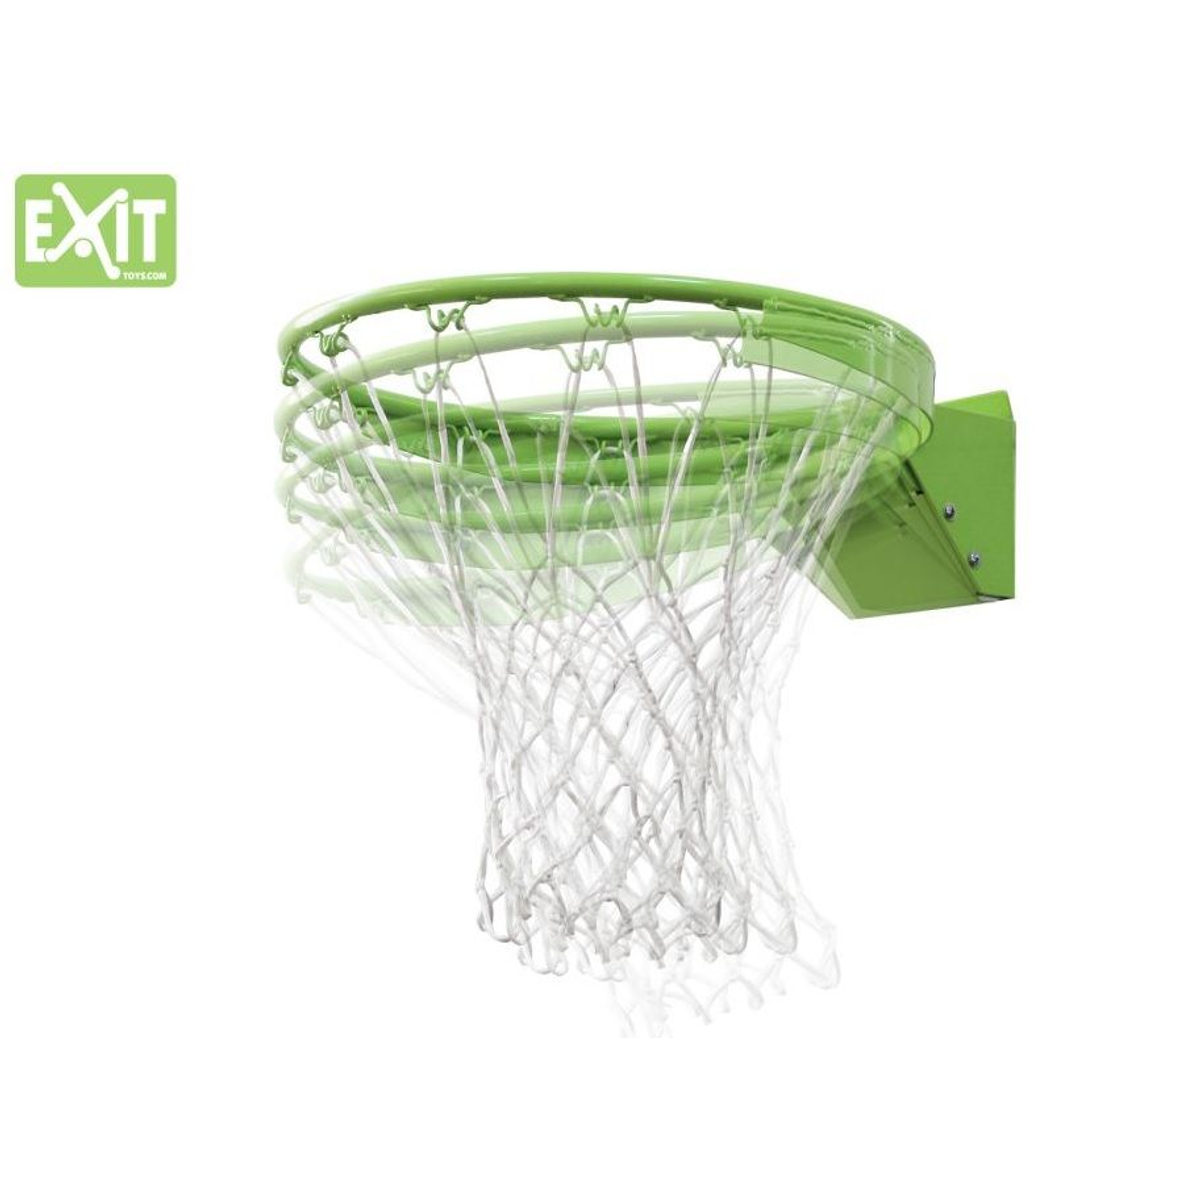 EXIT Galaxy Dunkring + Net Basketbalring